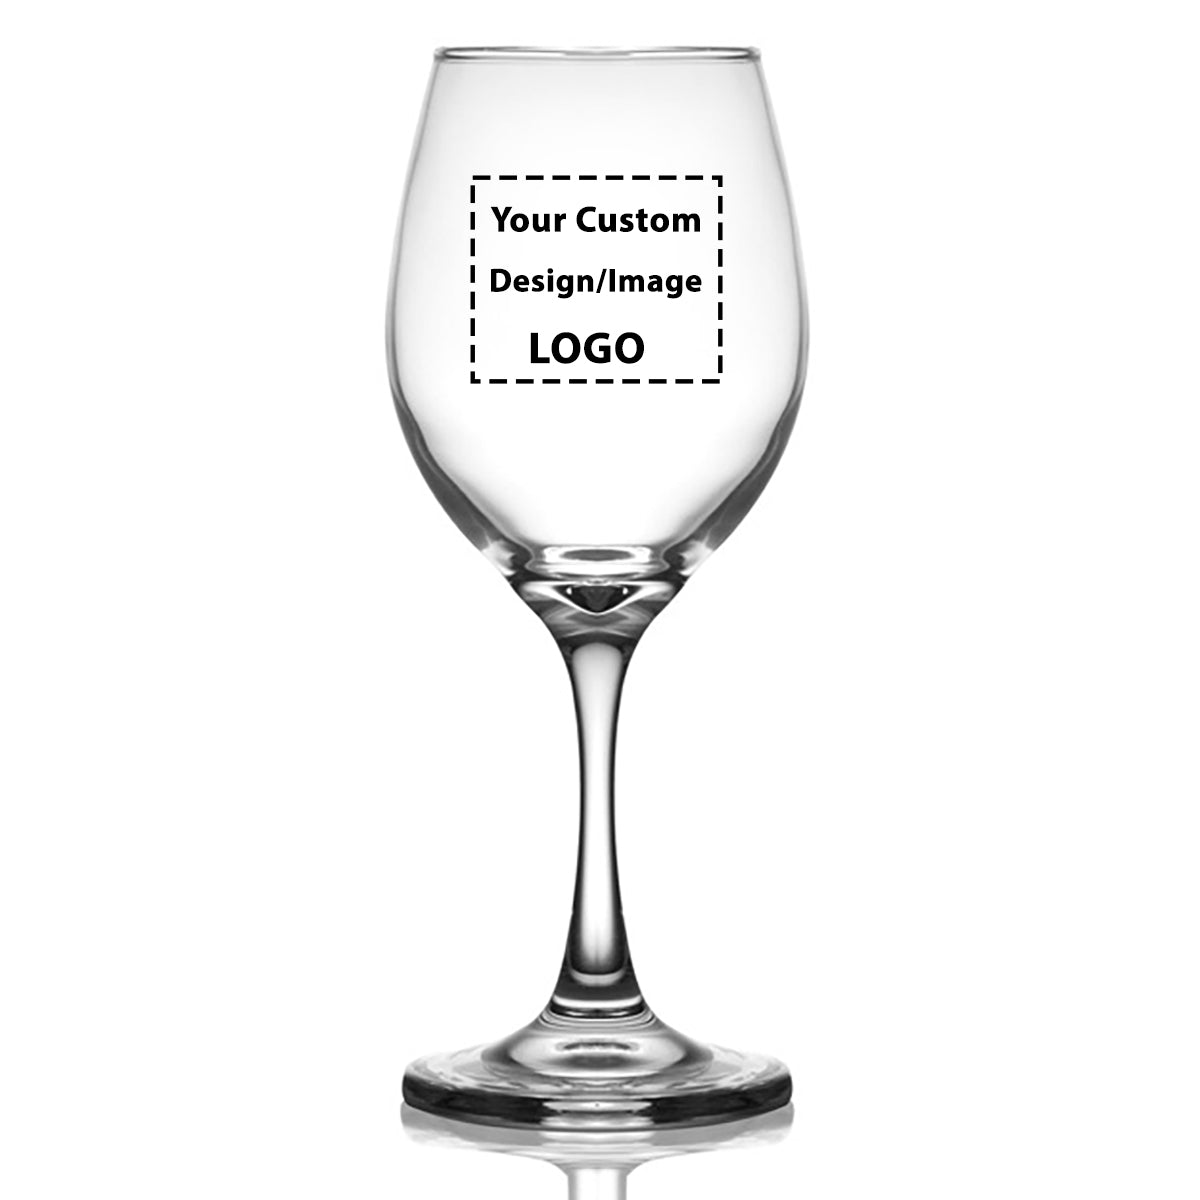 Custom Design/Image/Logo Designed Wine Glasses